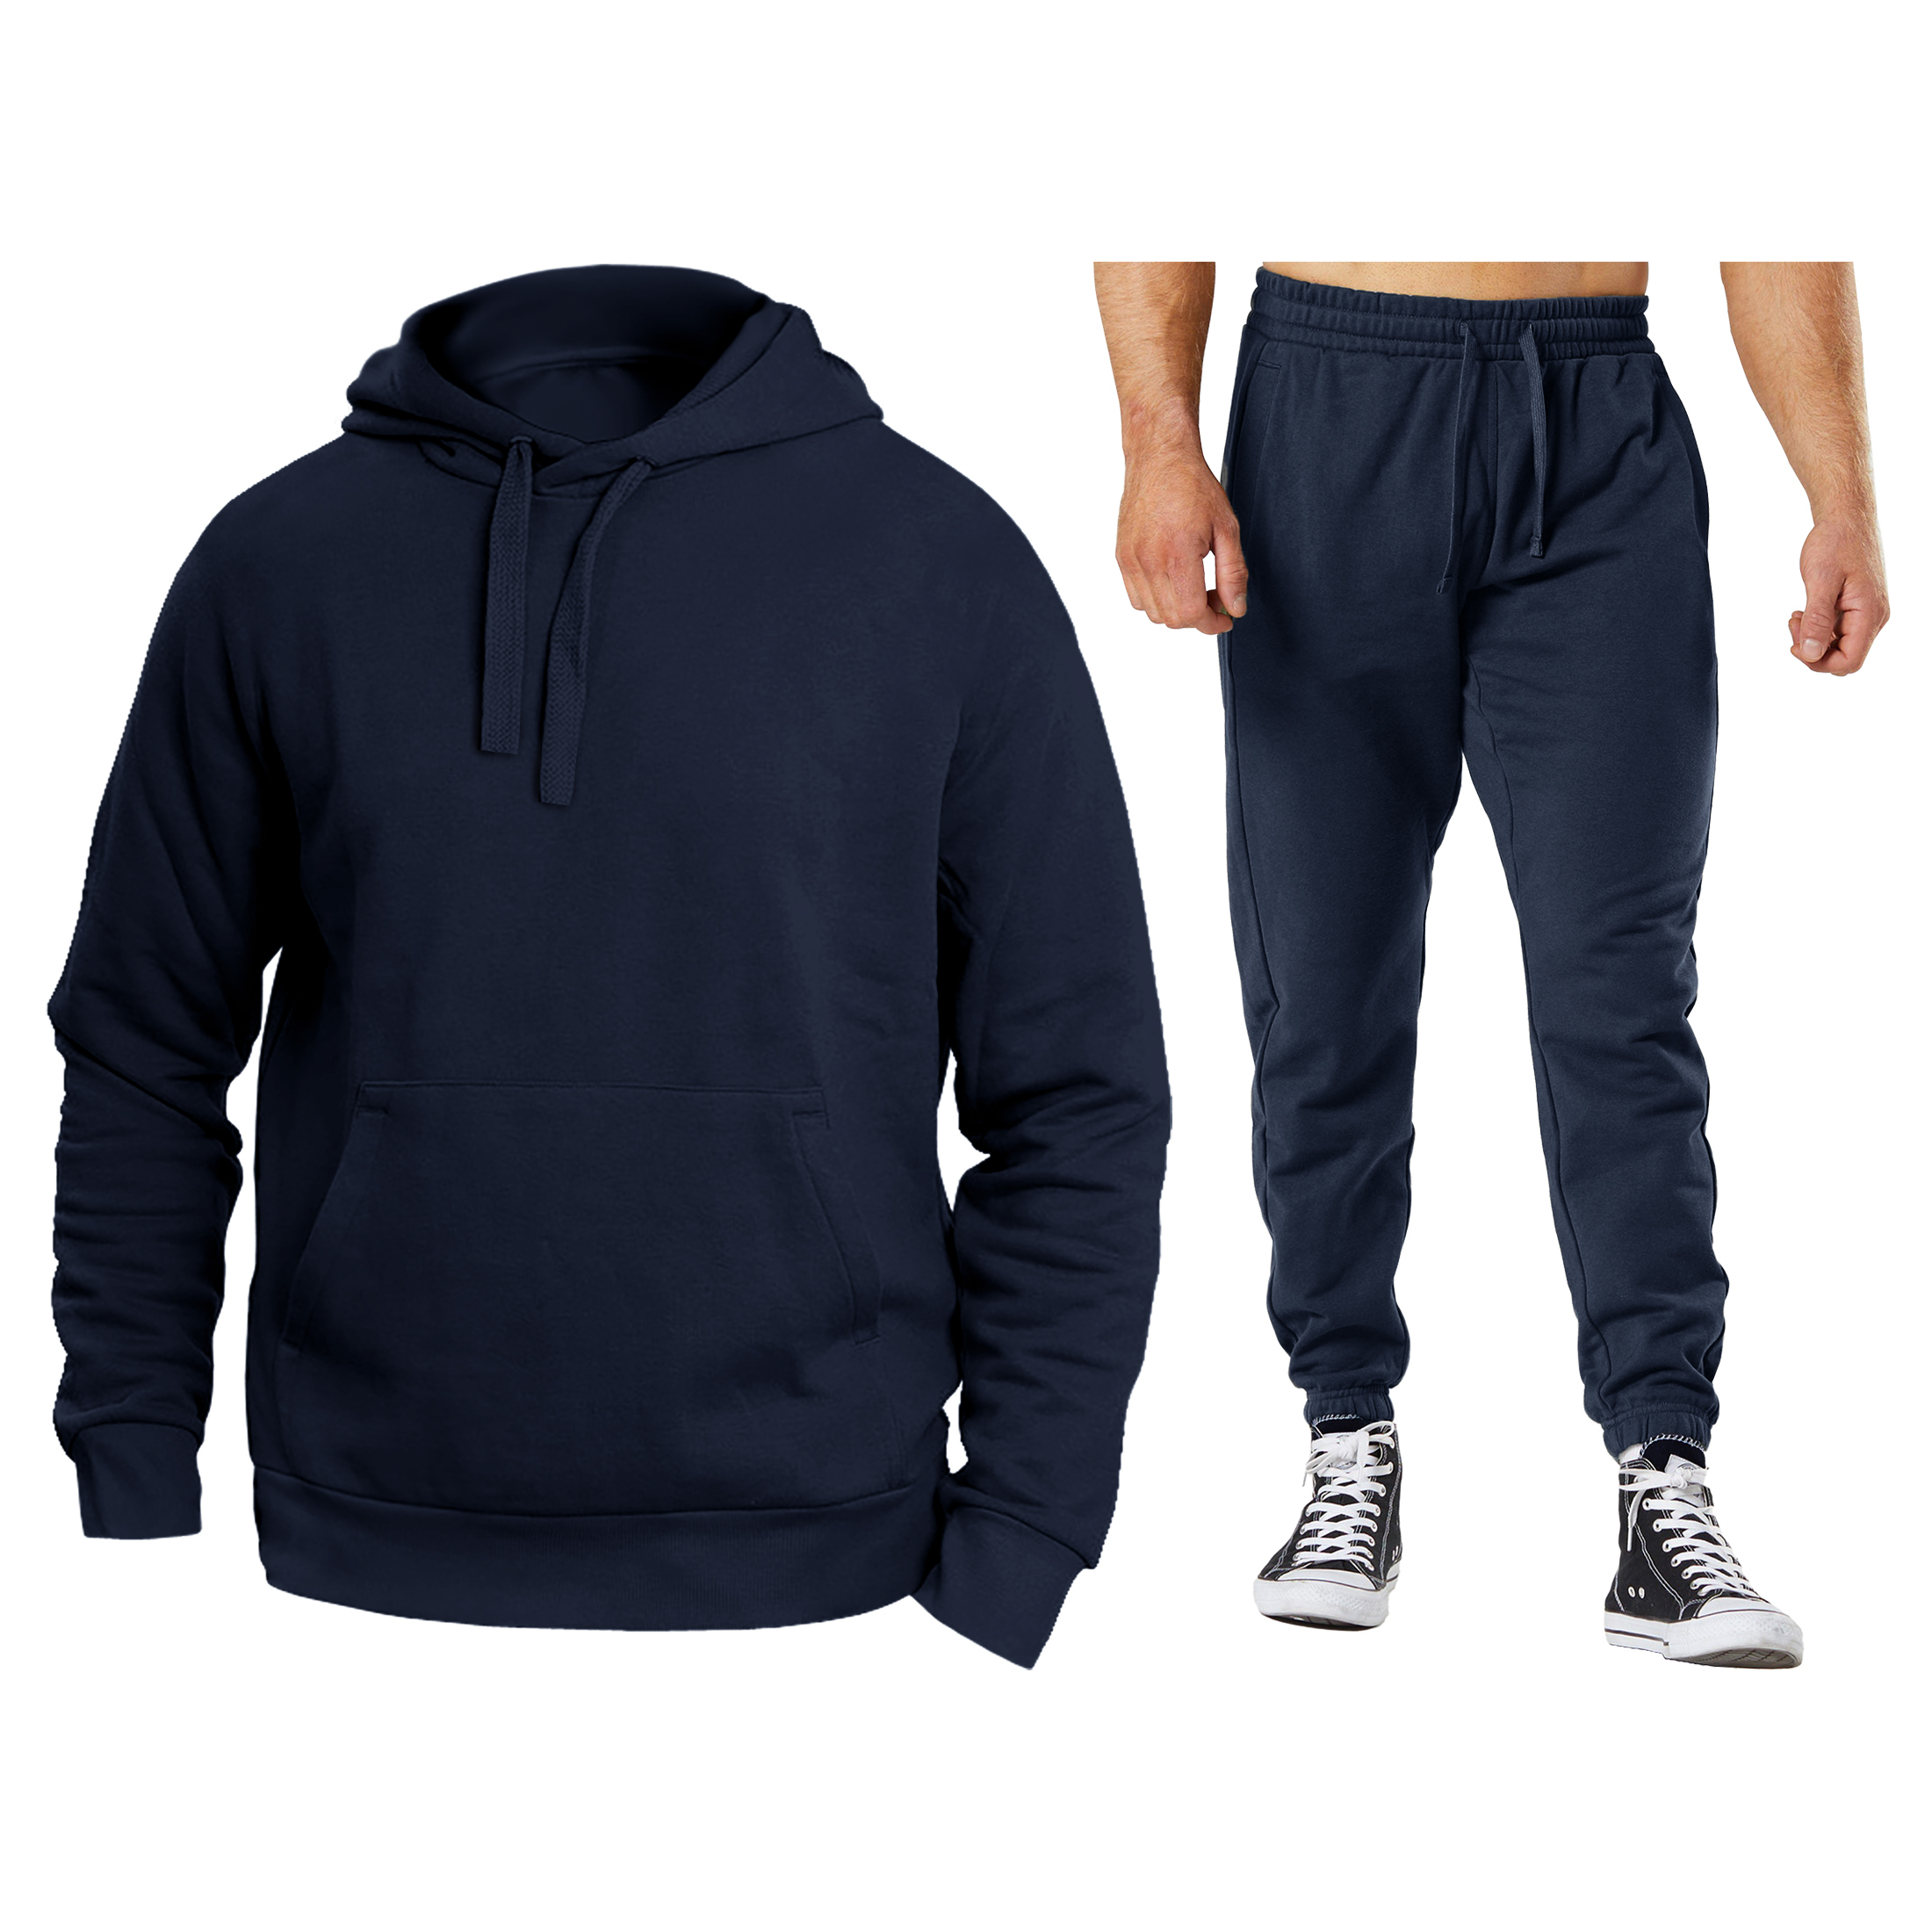 Men's Athletic Warm Jogging Pullover Active Sweatsuit - Charcoal, X-Large